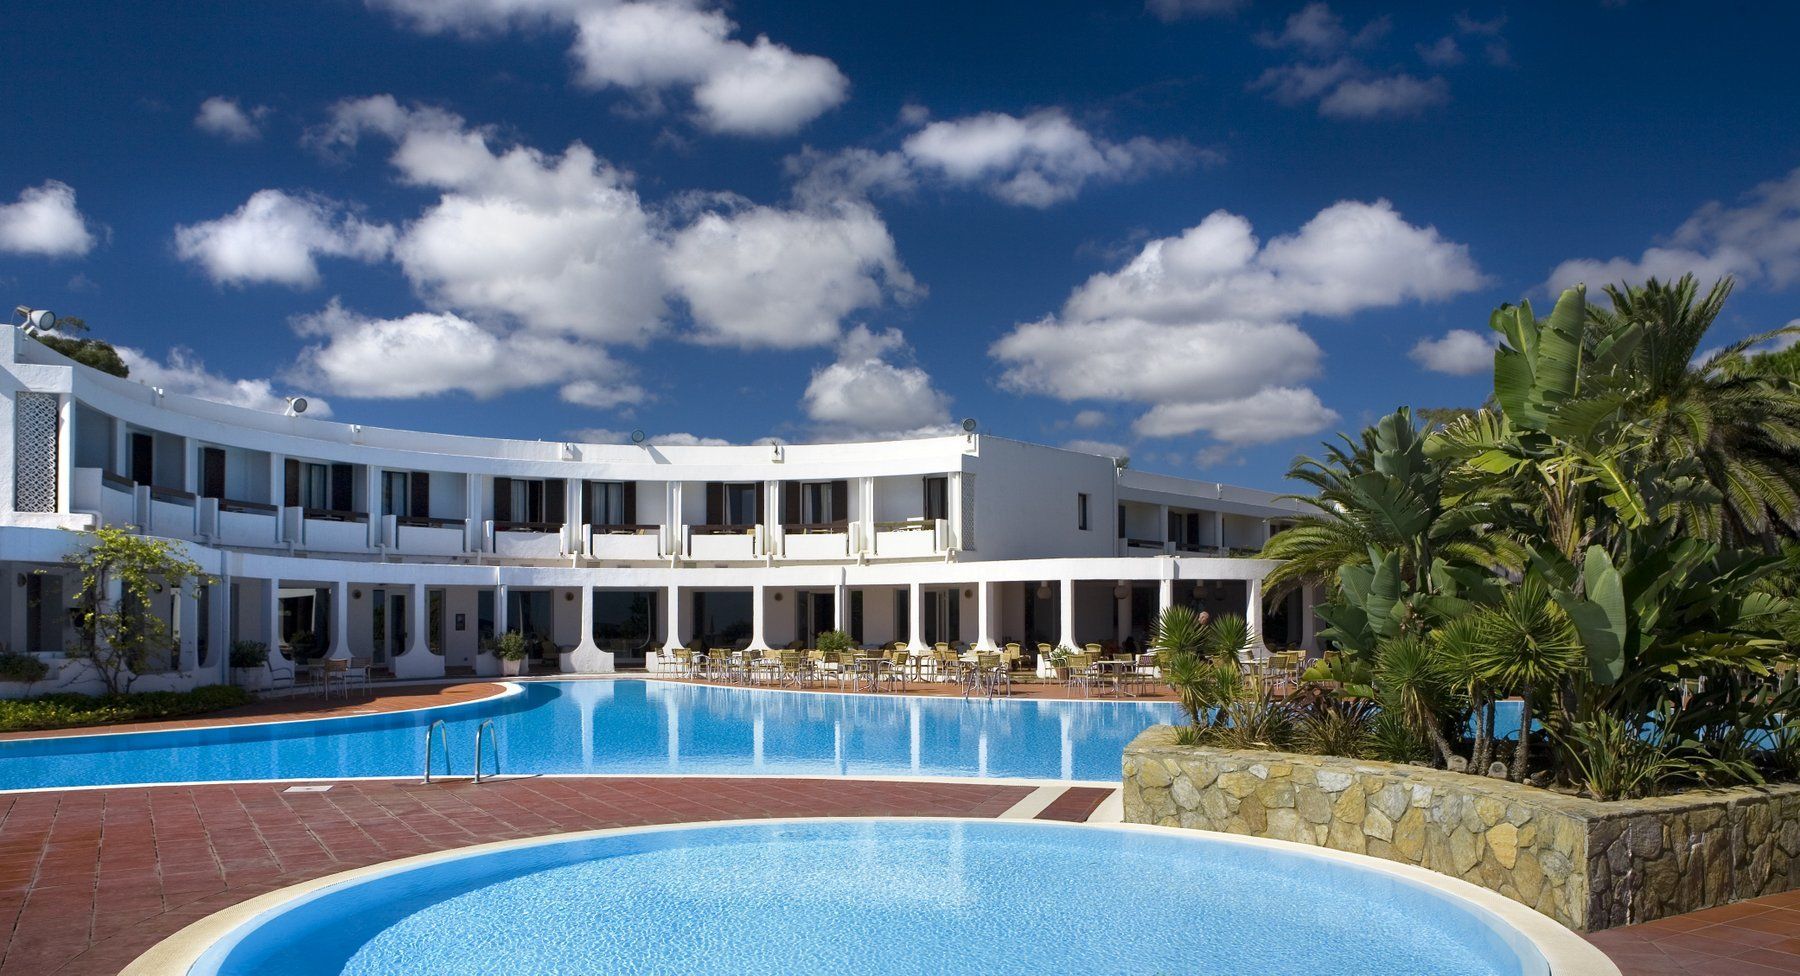 Vacances assurées – Jusqu’à 15% de rabais + Assurance annulation incluse Hotel Flamingo